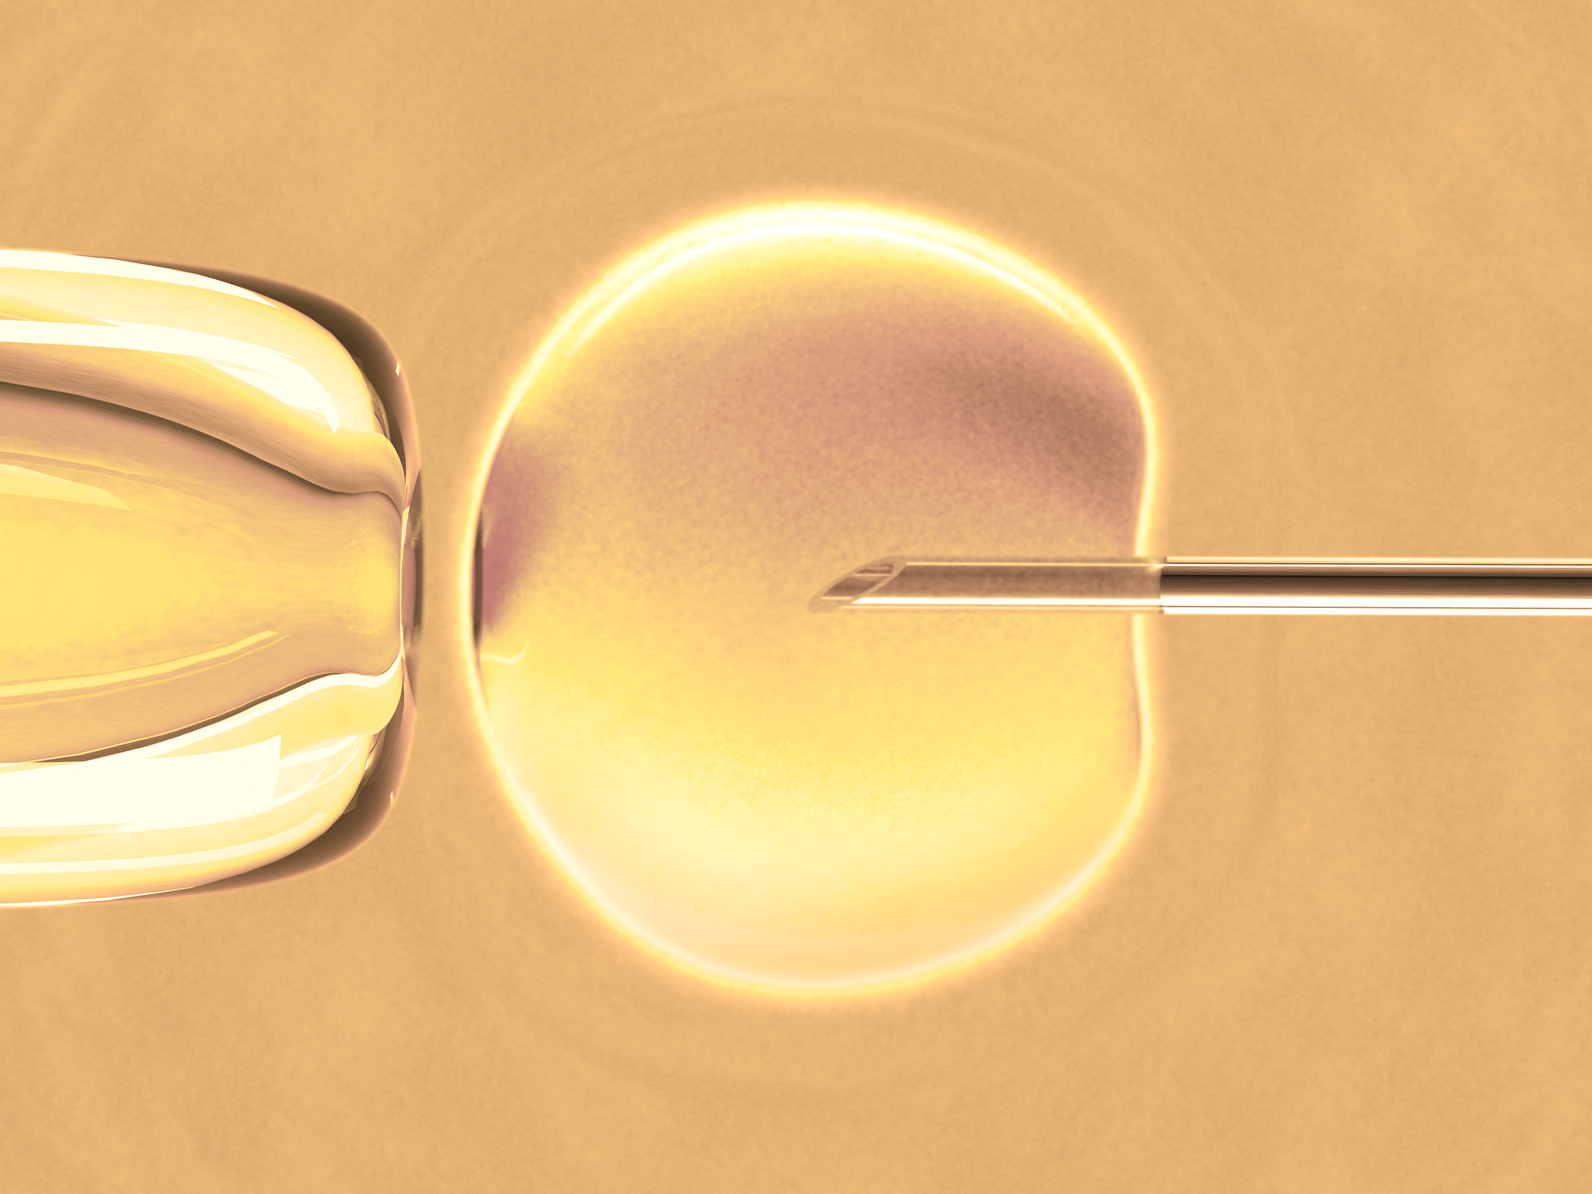 In vitro fecundation using sperm (warm color)